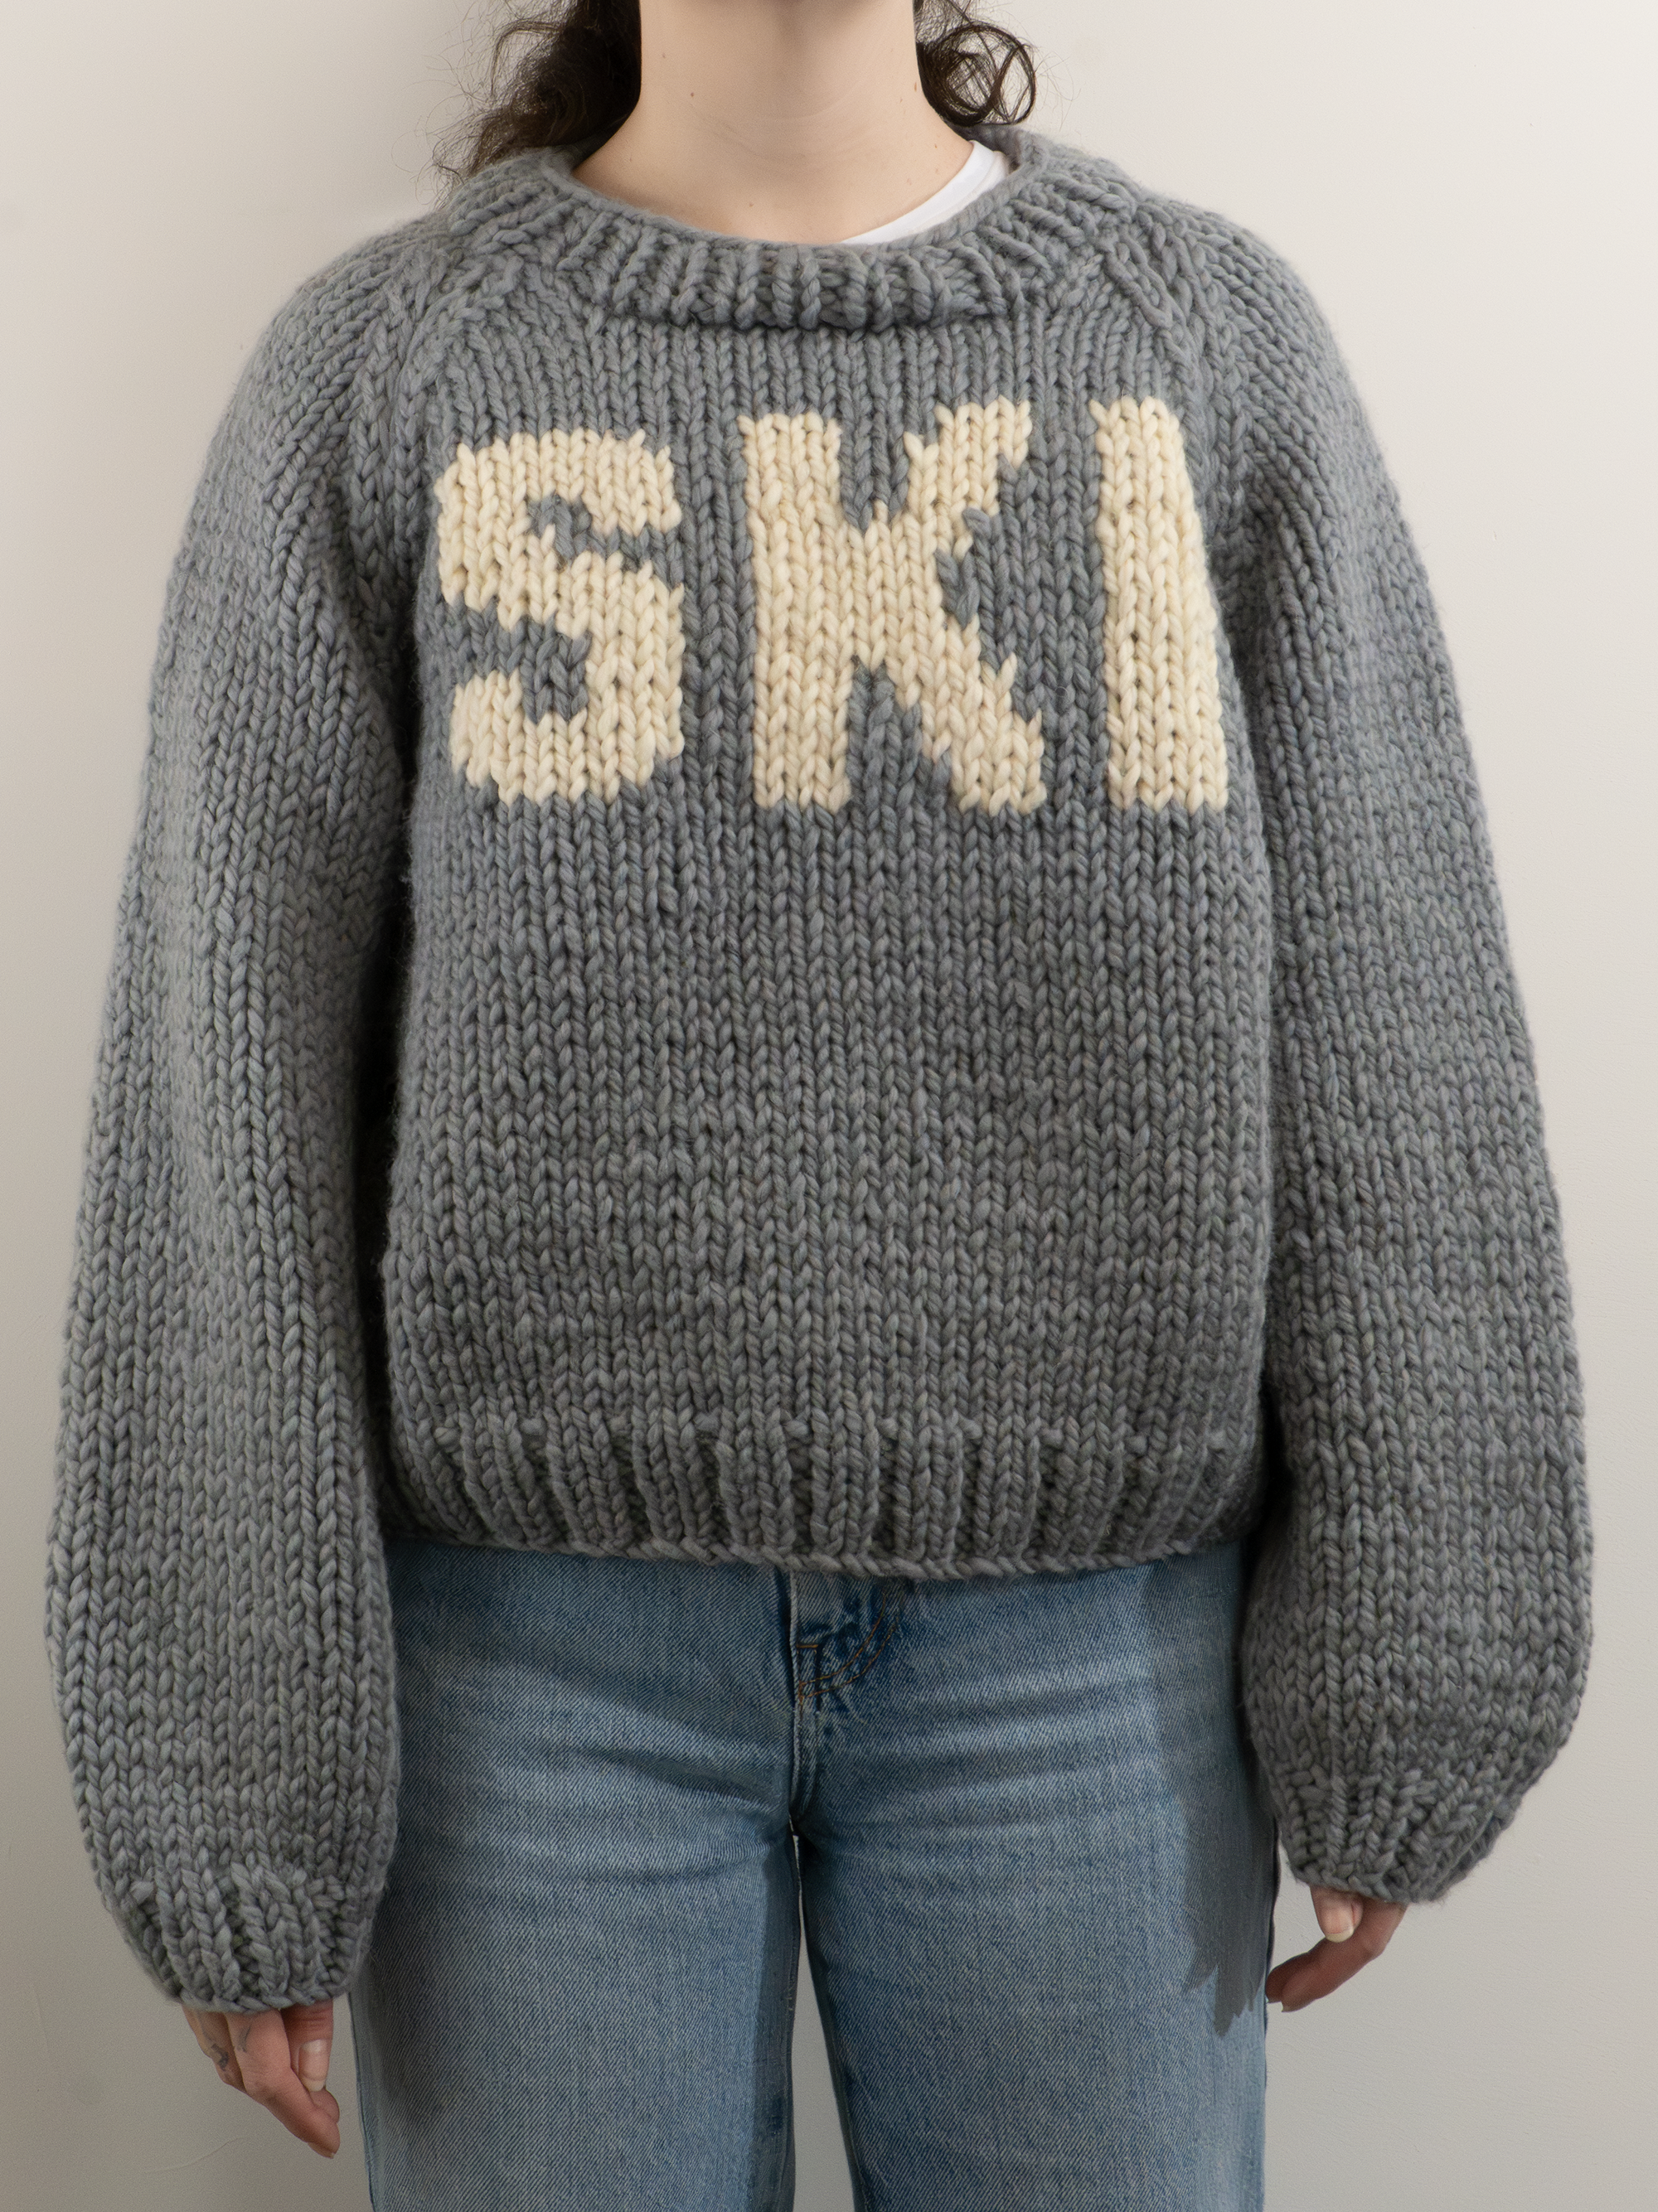 Ski Pullover (Knitters First) Oatmeal/Vanilla - Sample Sale 24